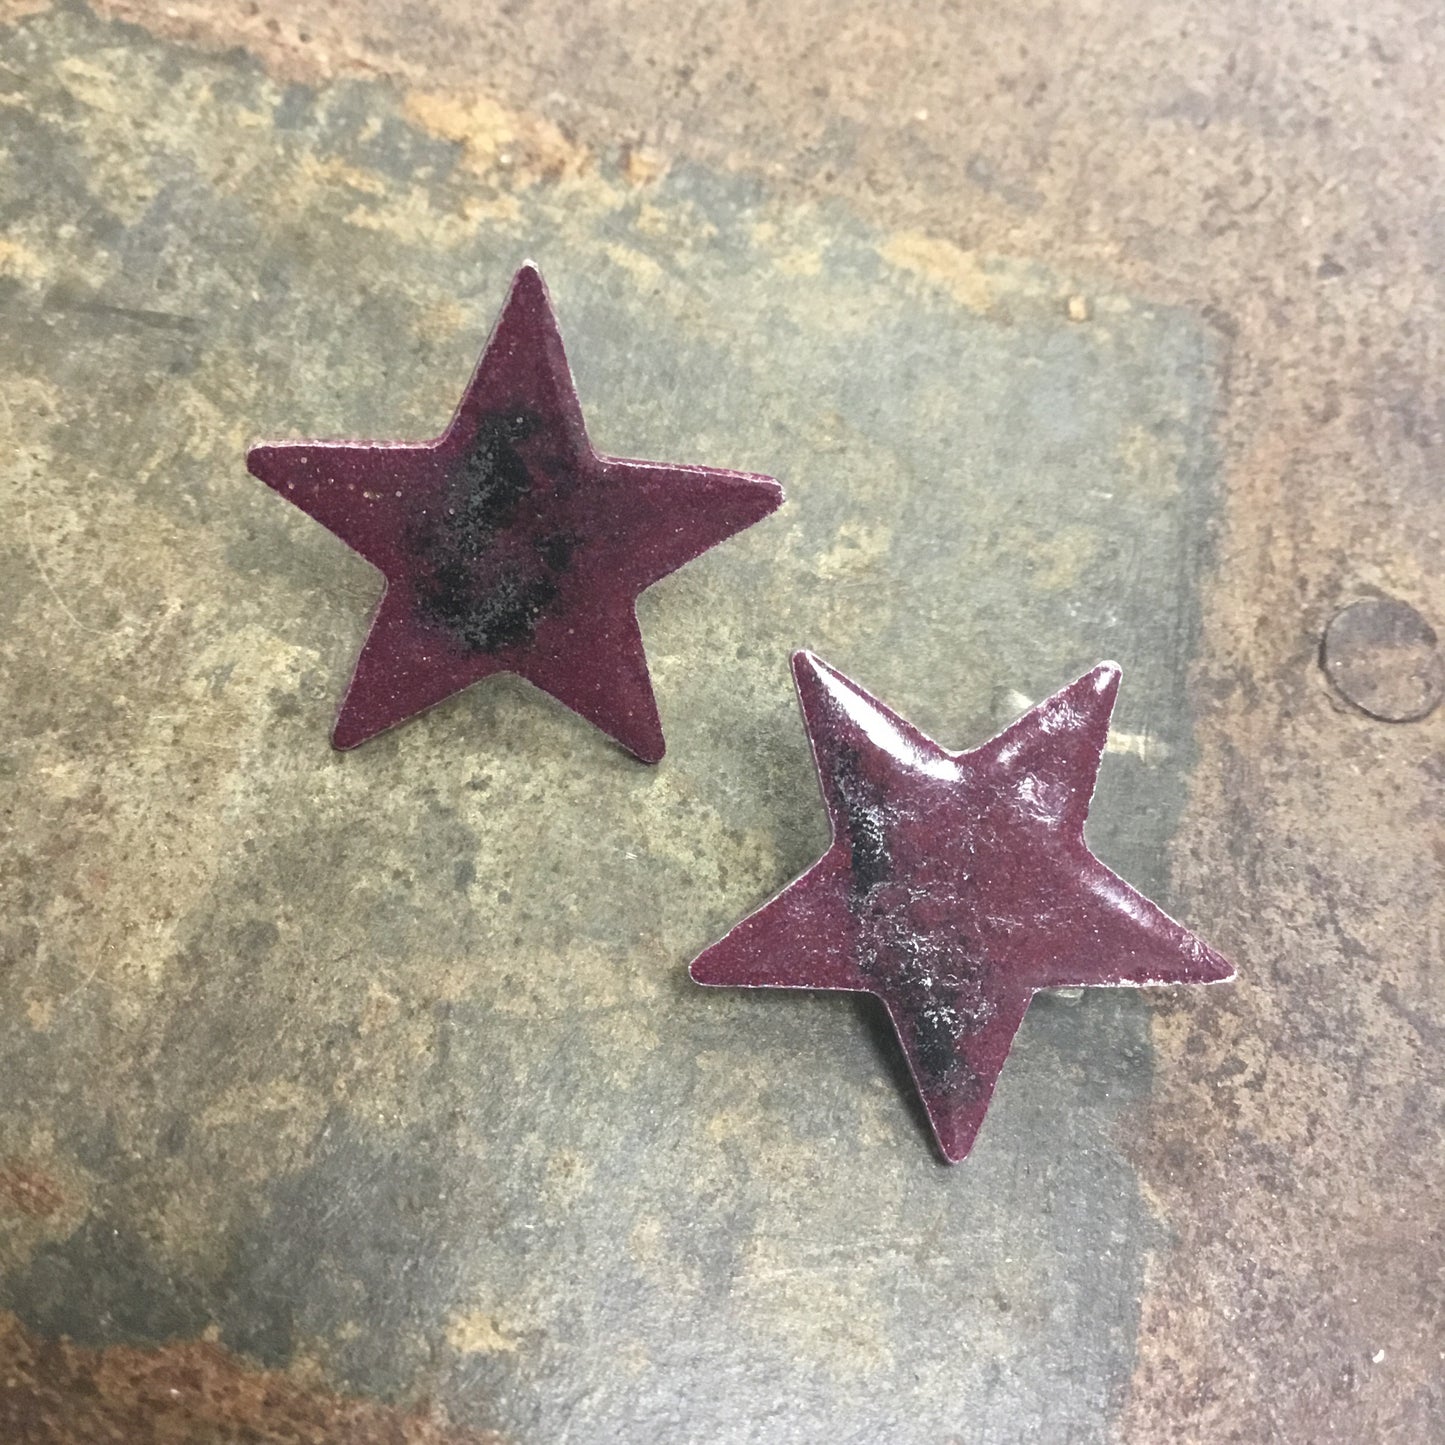 Marlo St Ives - Star Studs in Aubergine Mottled*